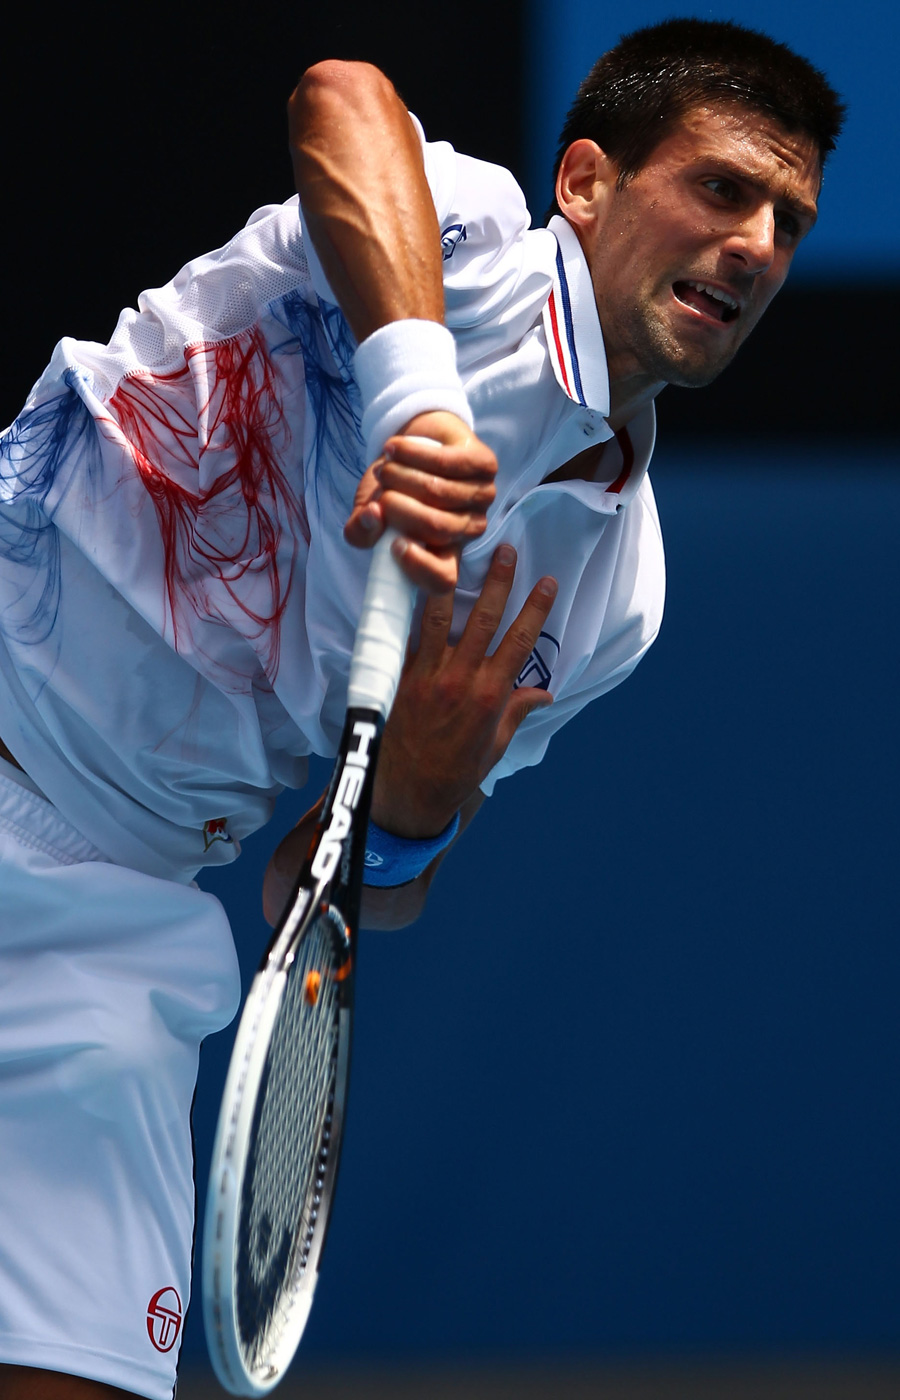 Australian Open 2012 w obiektywie